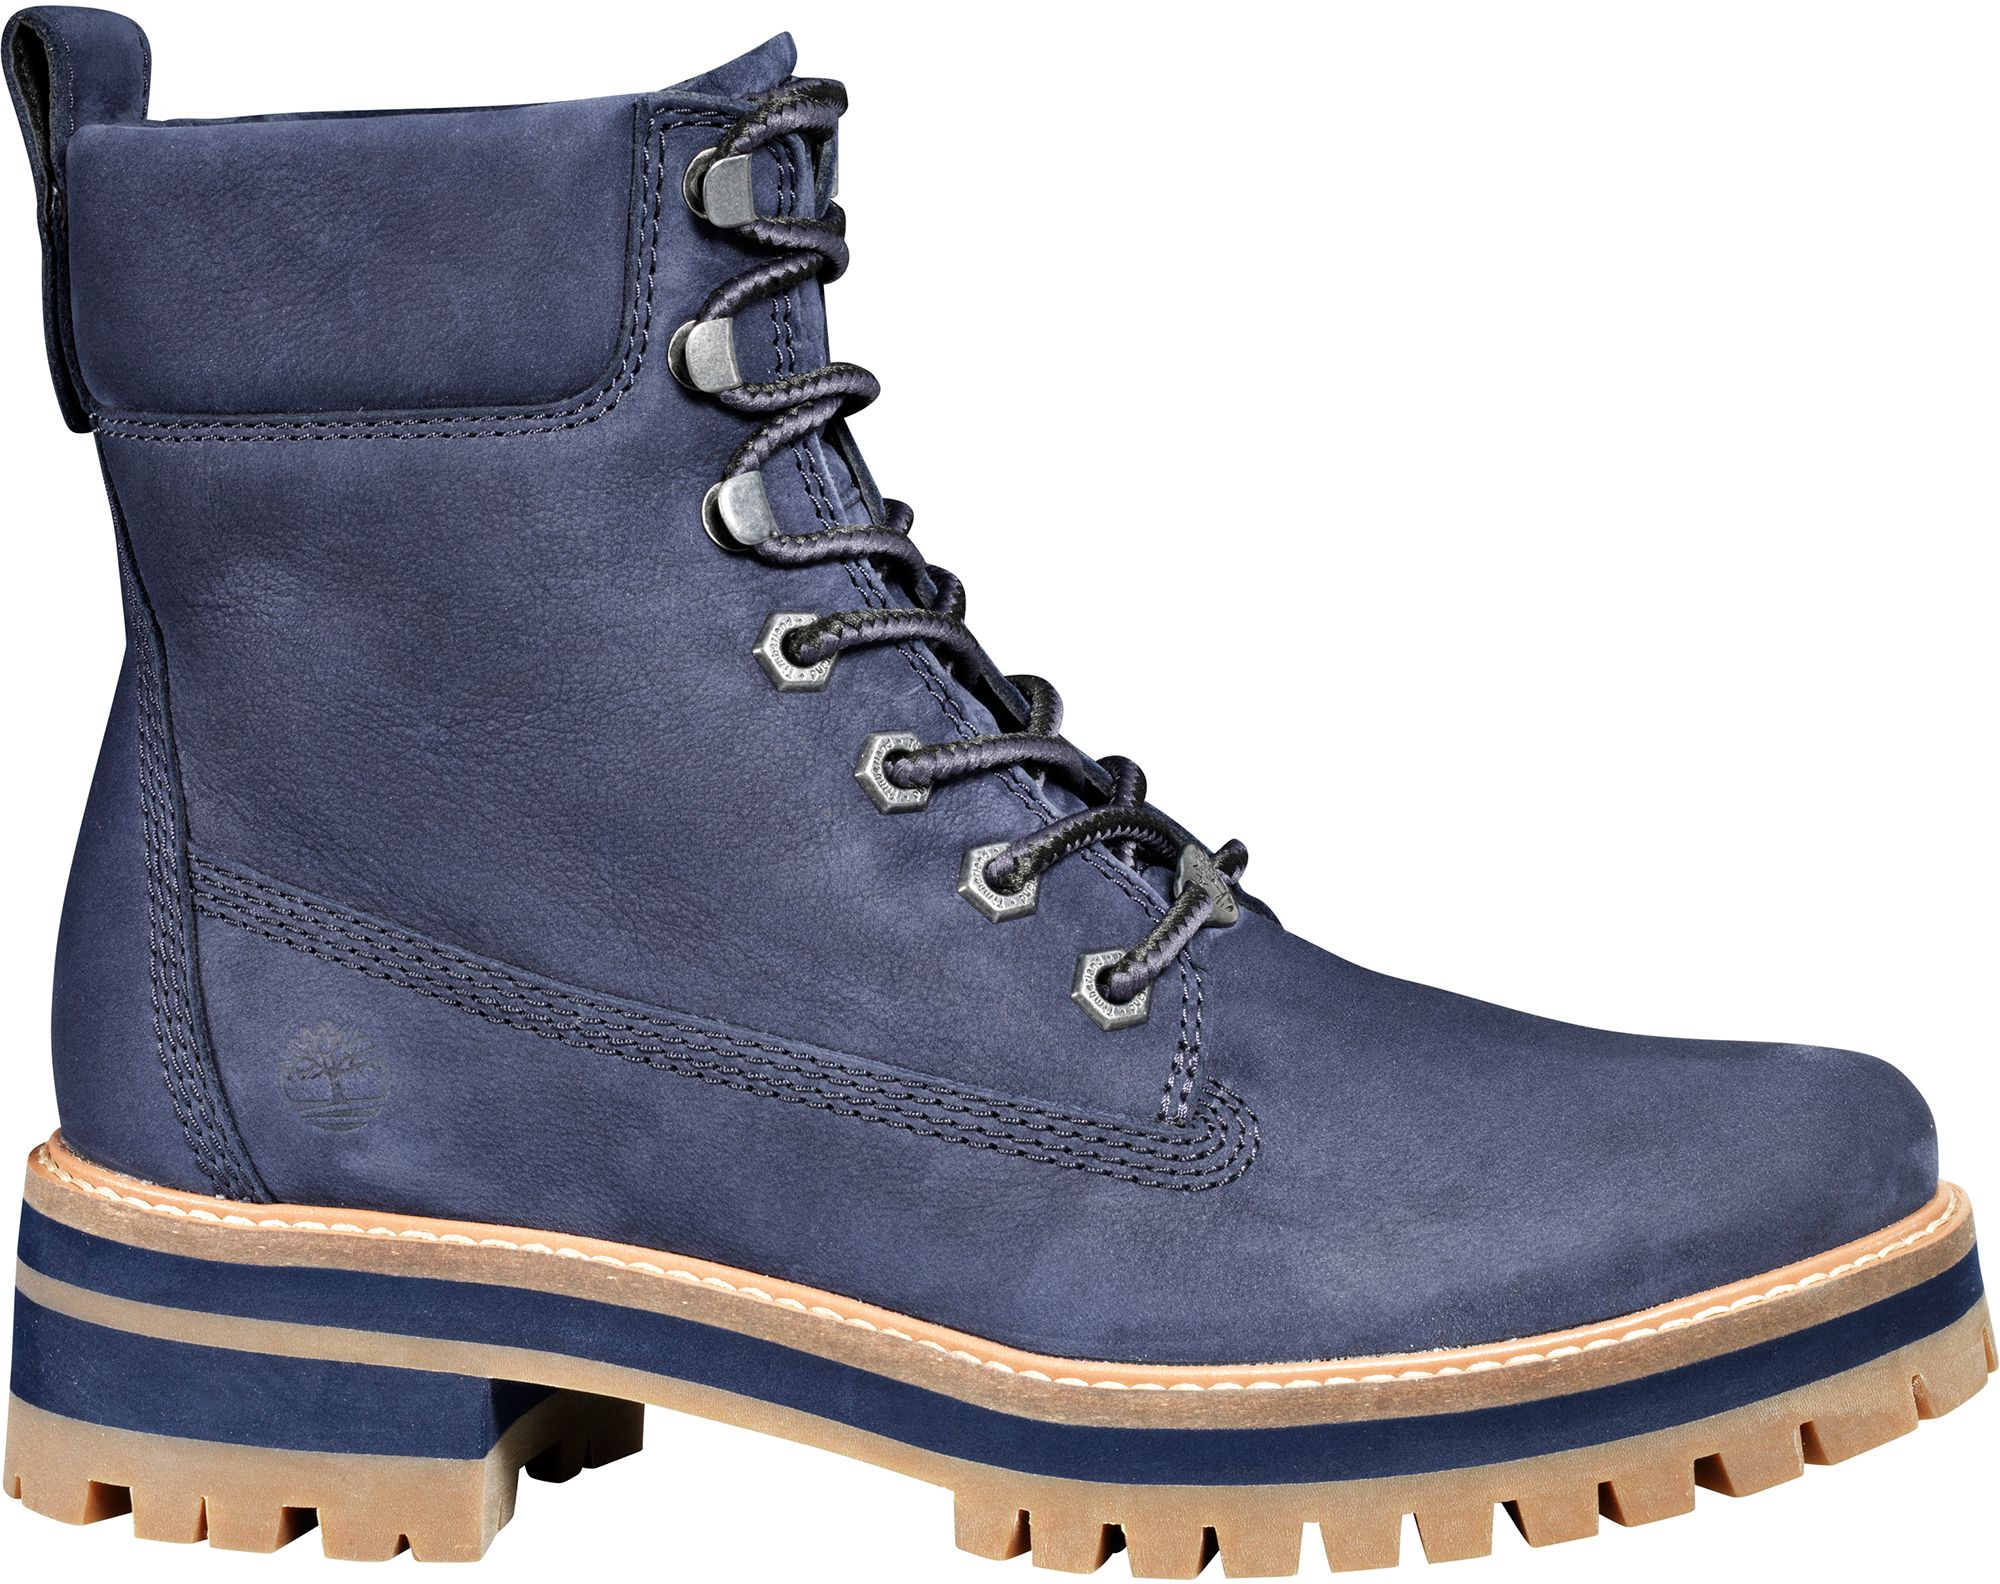 navy blue timberland boots womens